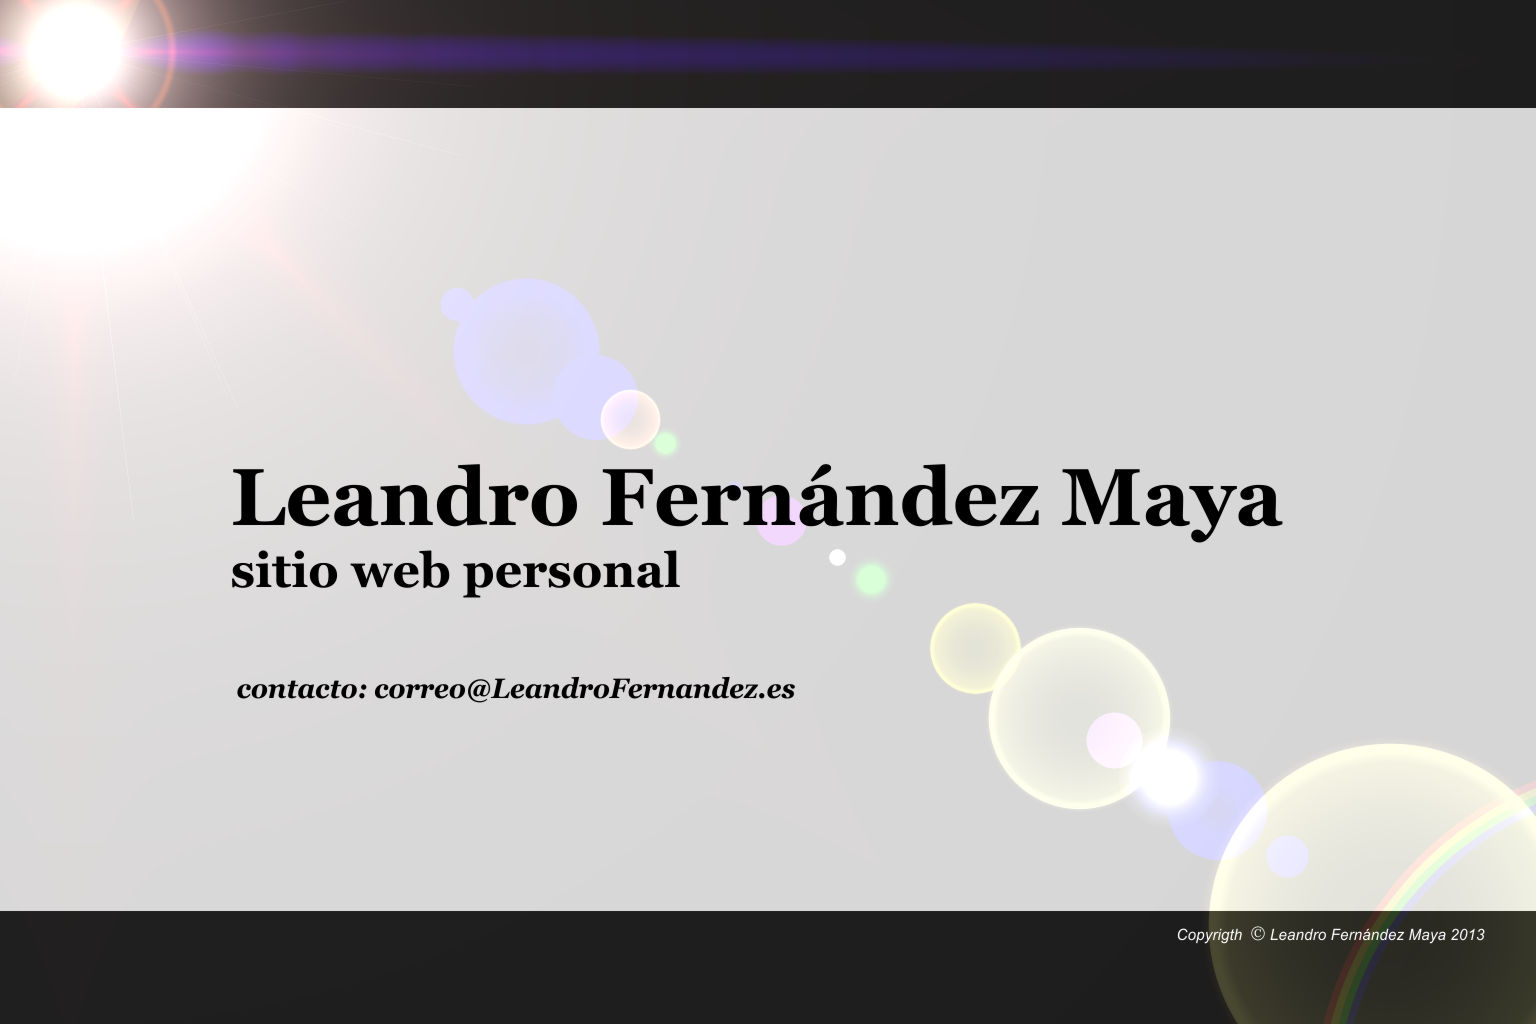 Leandro Fernández Maya - sitio web personal | LeandroFernandez.es | correo@LeandroFernandez.es